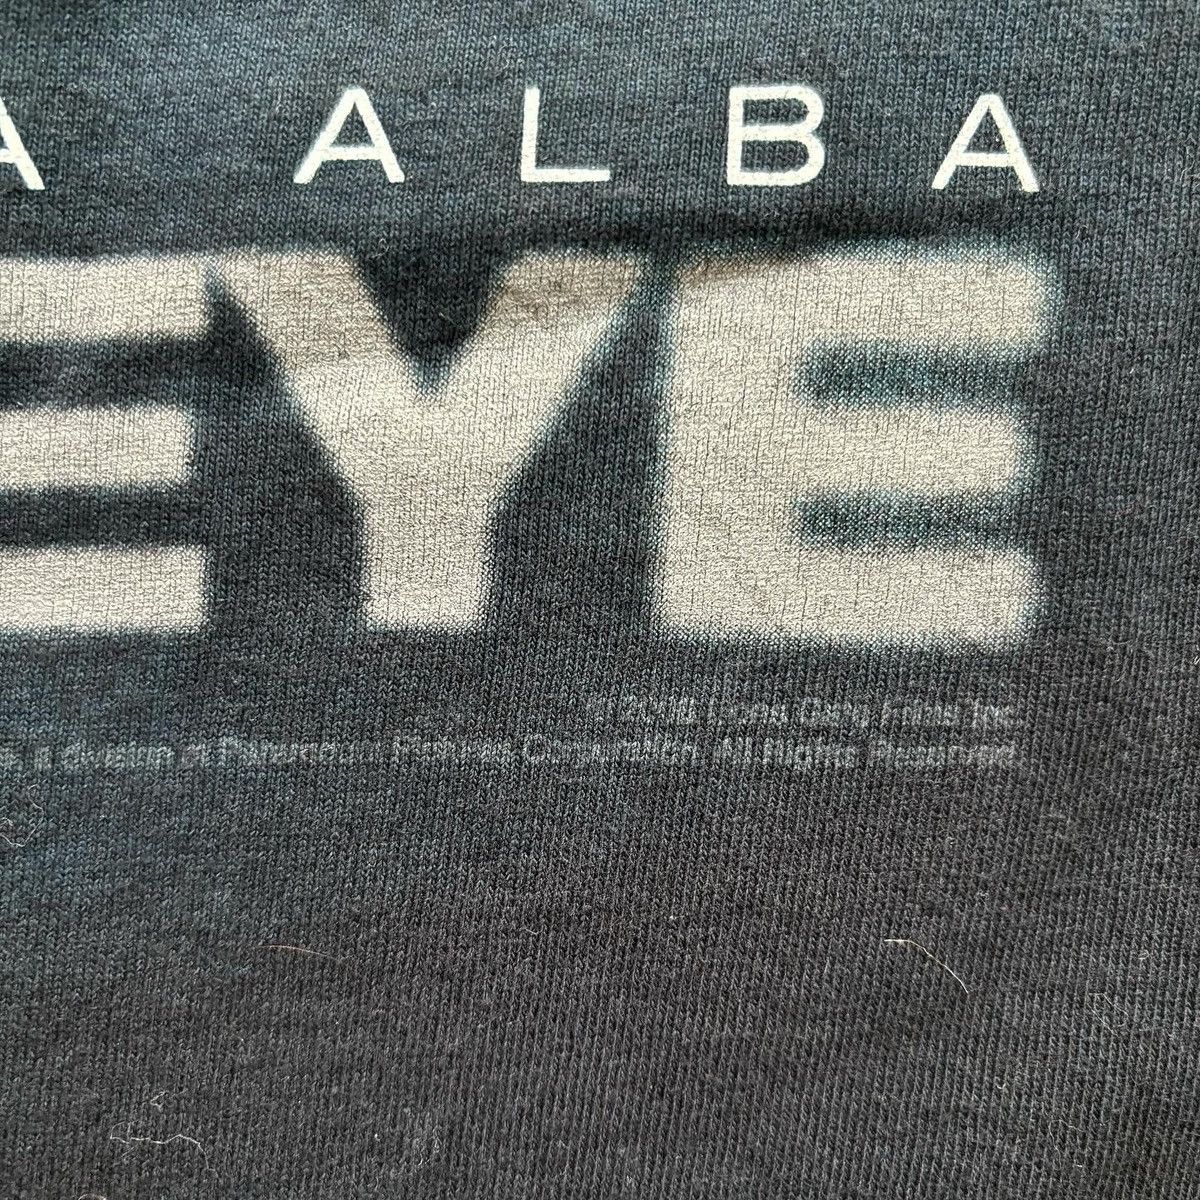 Jerzees Y2K 2006 Jessica Alba The Eye Movie Promo Tee Size US XL / EU 56 / 4 - 4 Preview